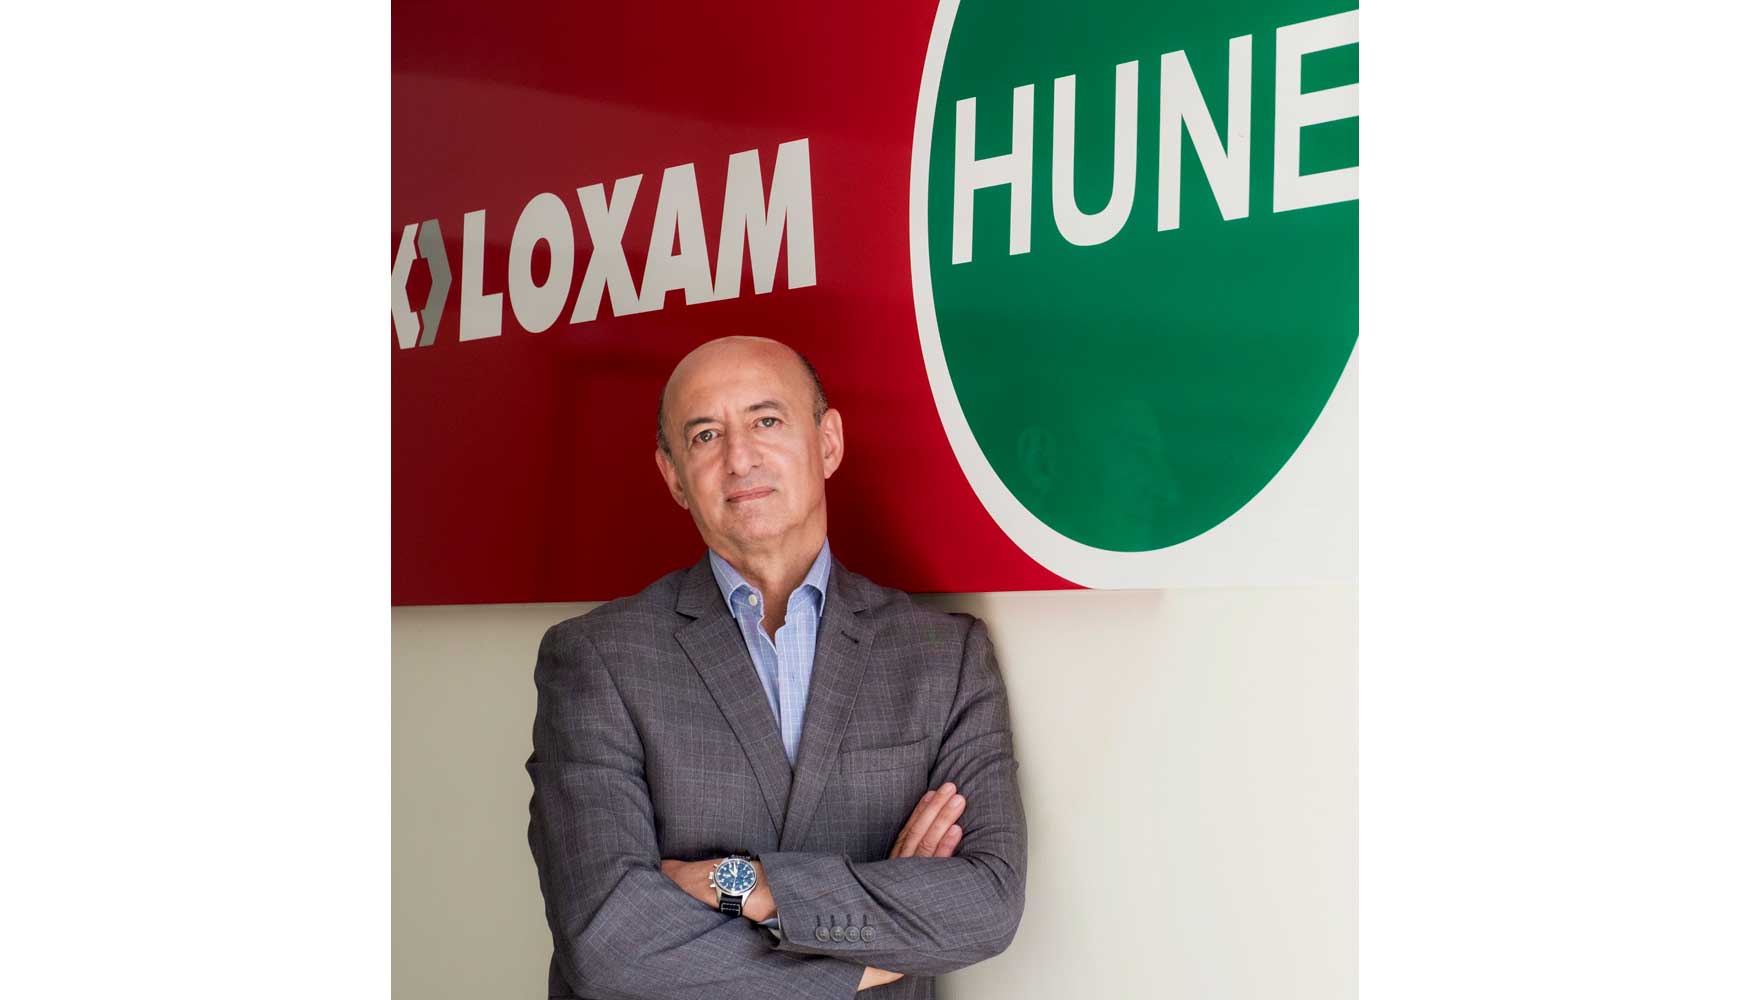 Luis ngel Salas Manrique, CEO de LoxamHune